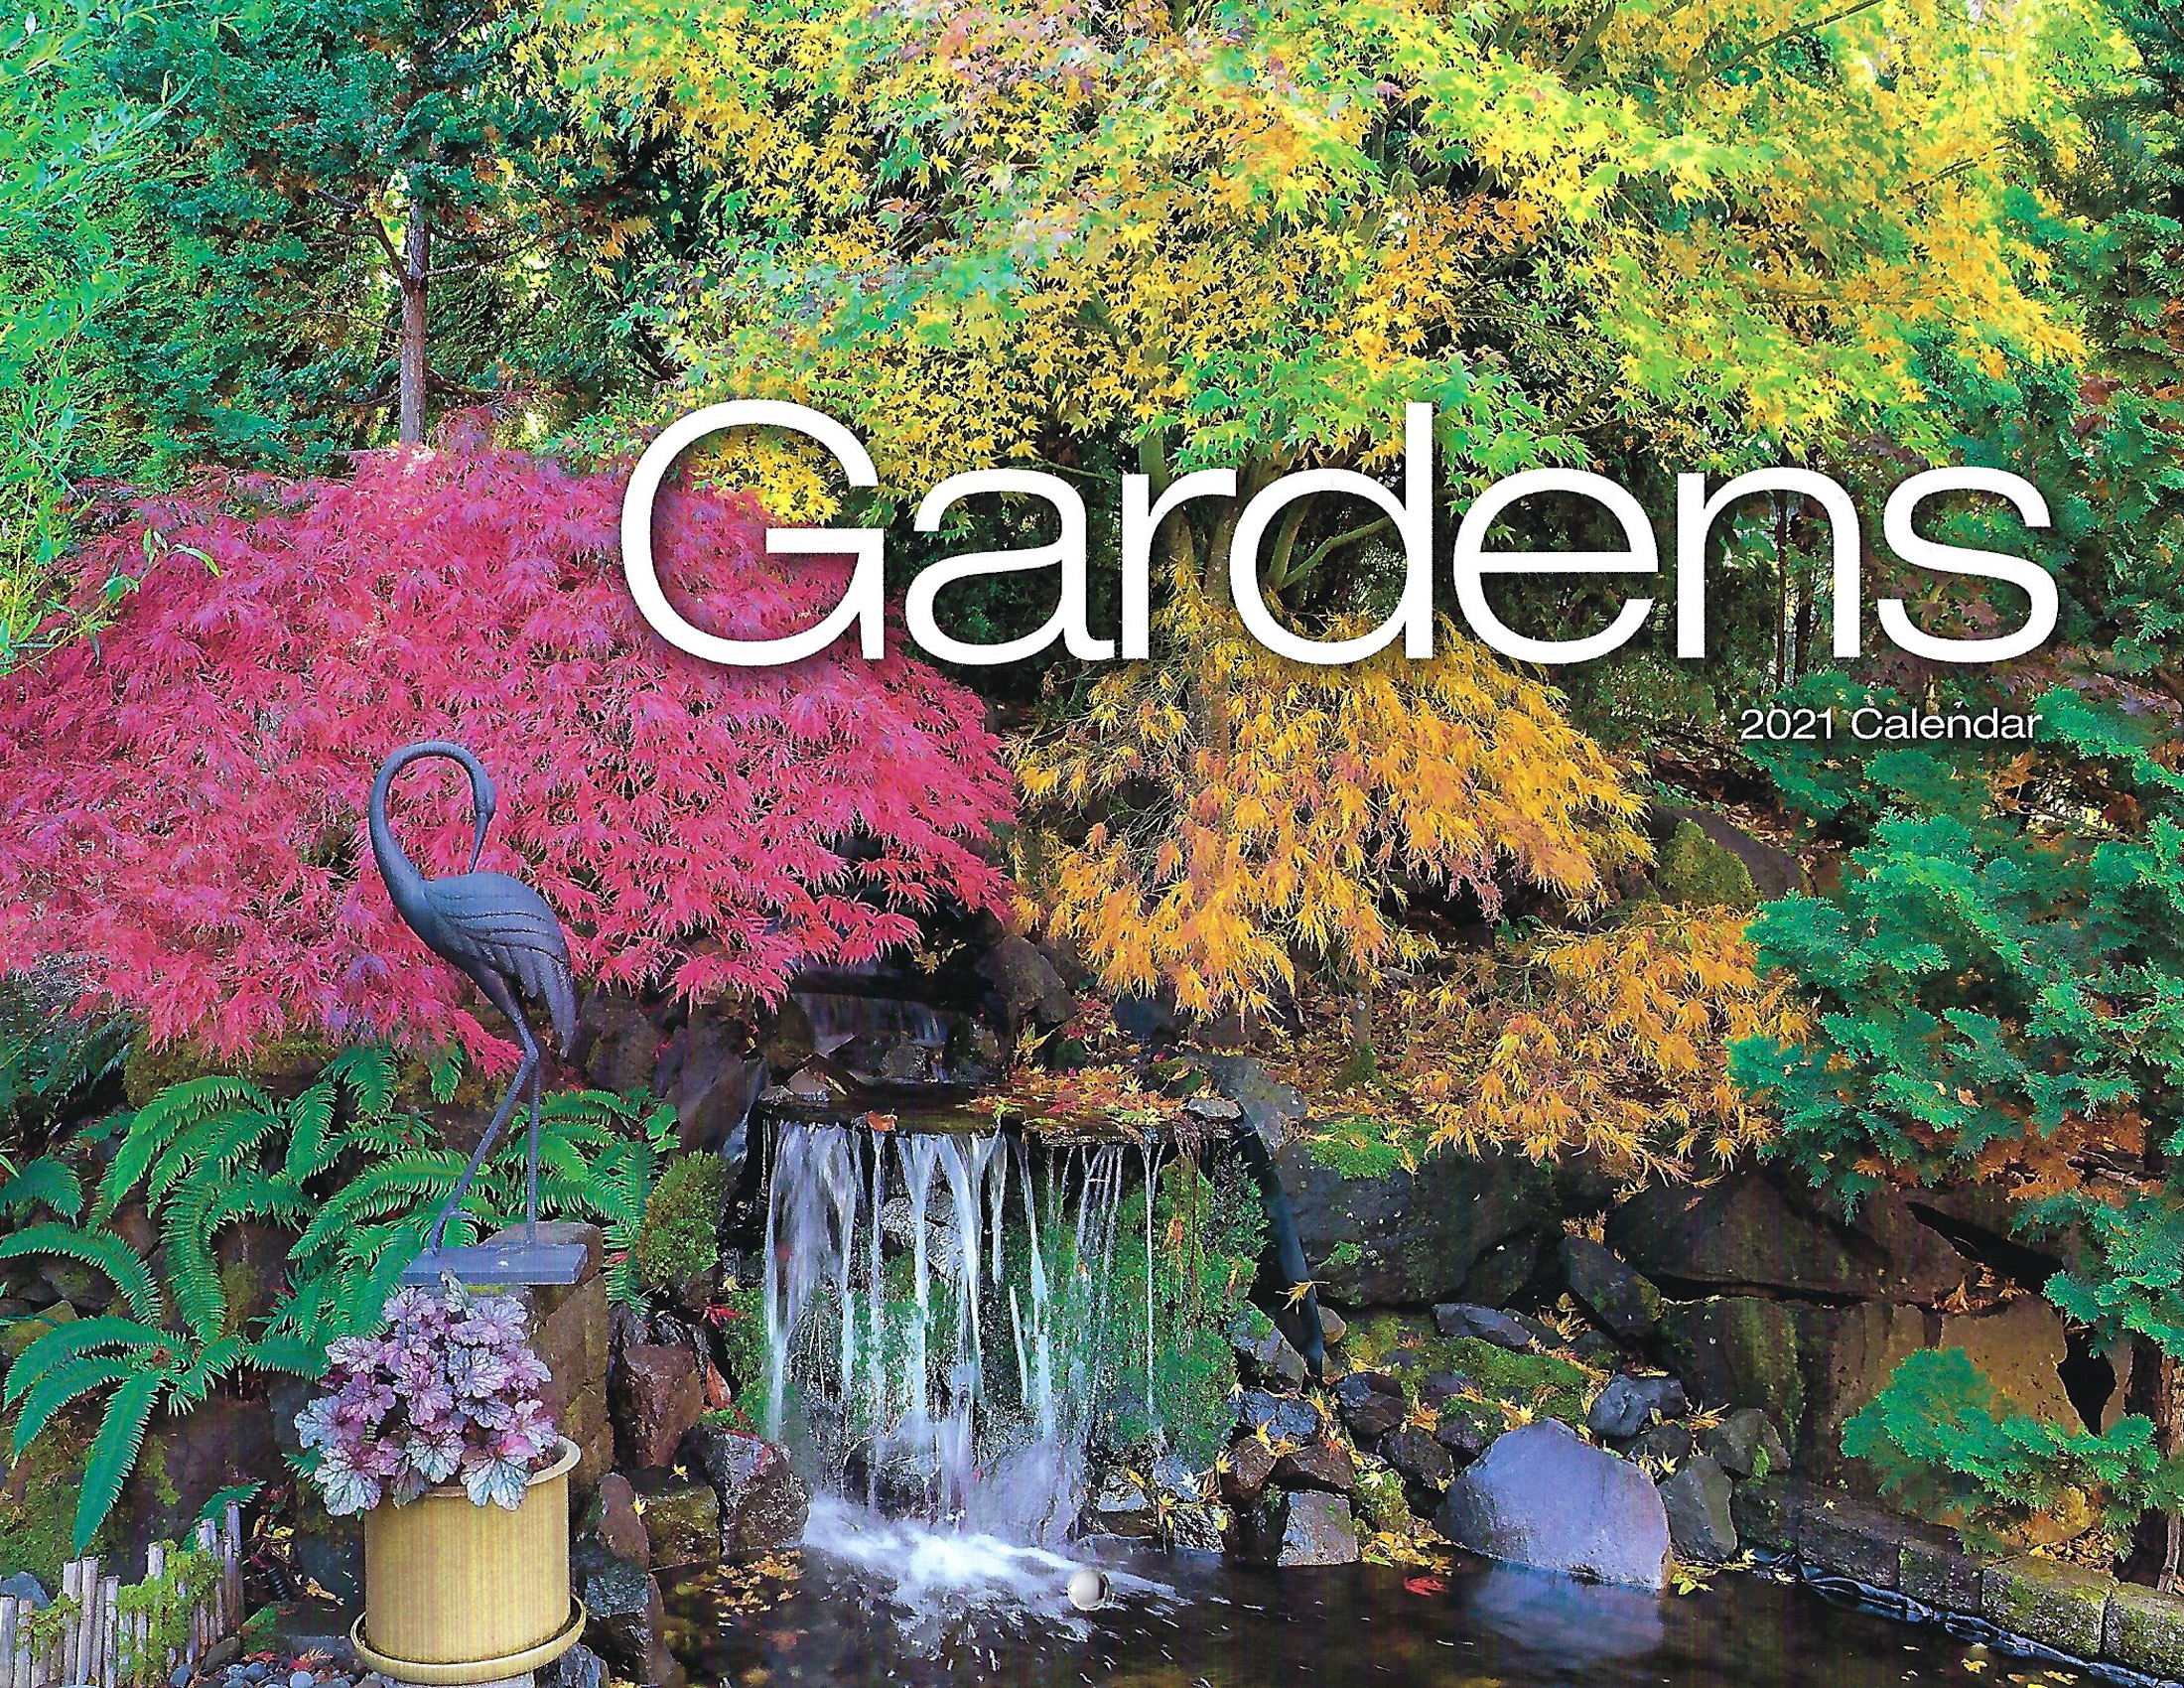 808 Gardens Calendar